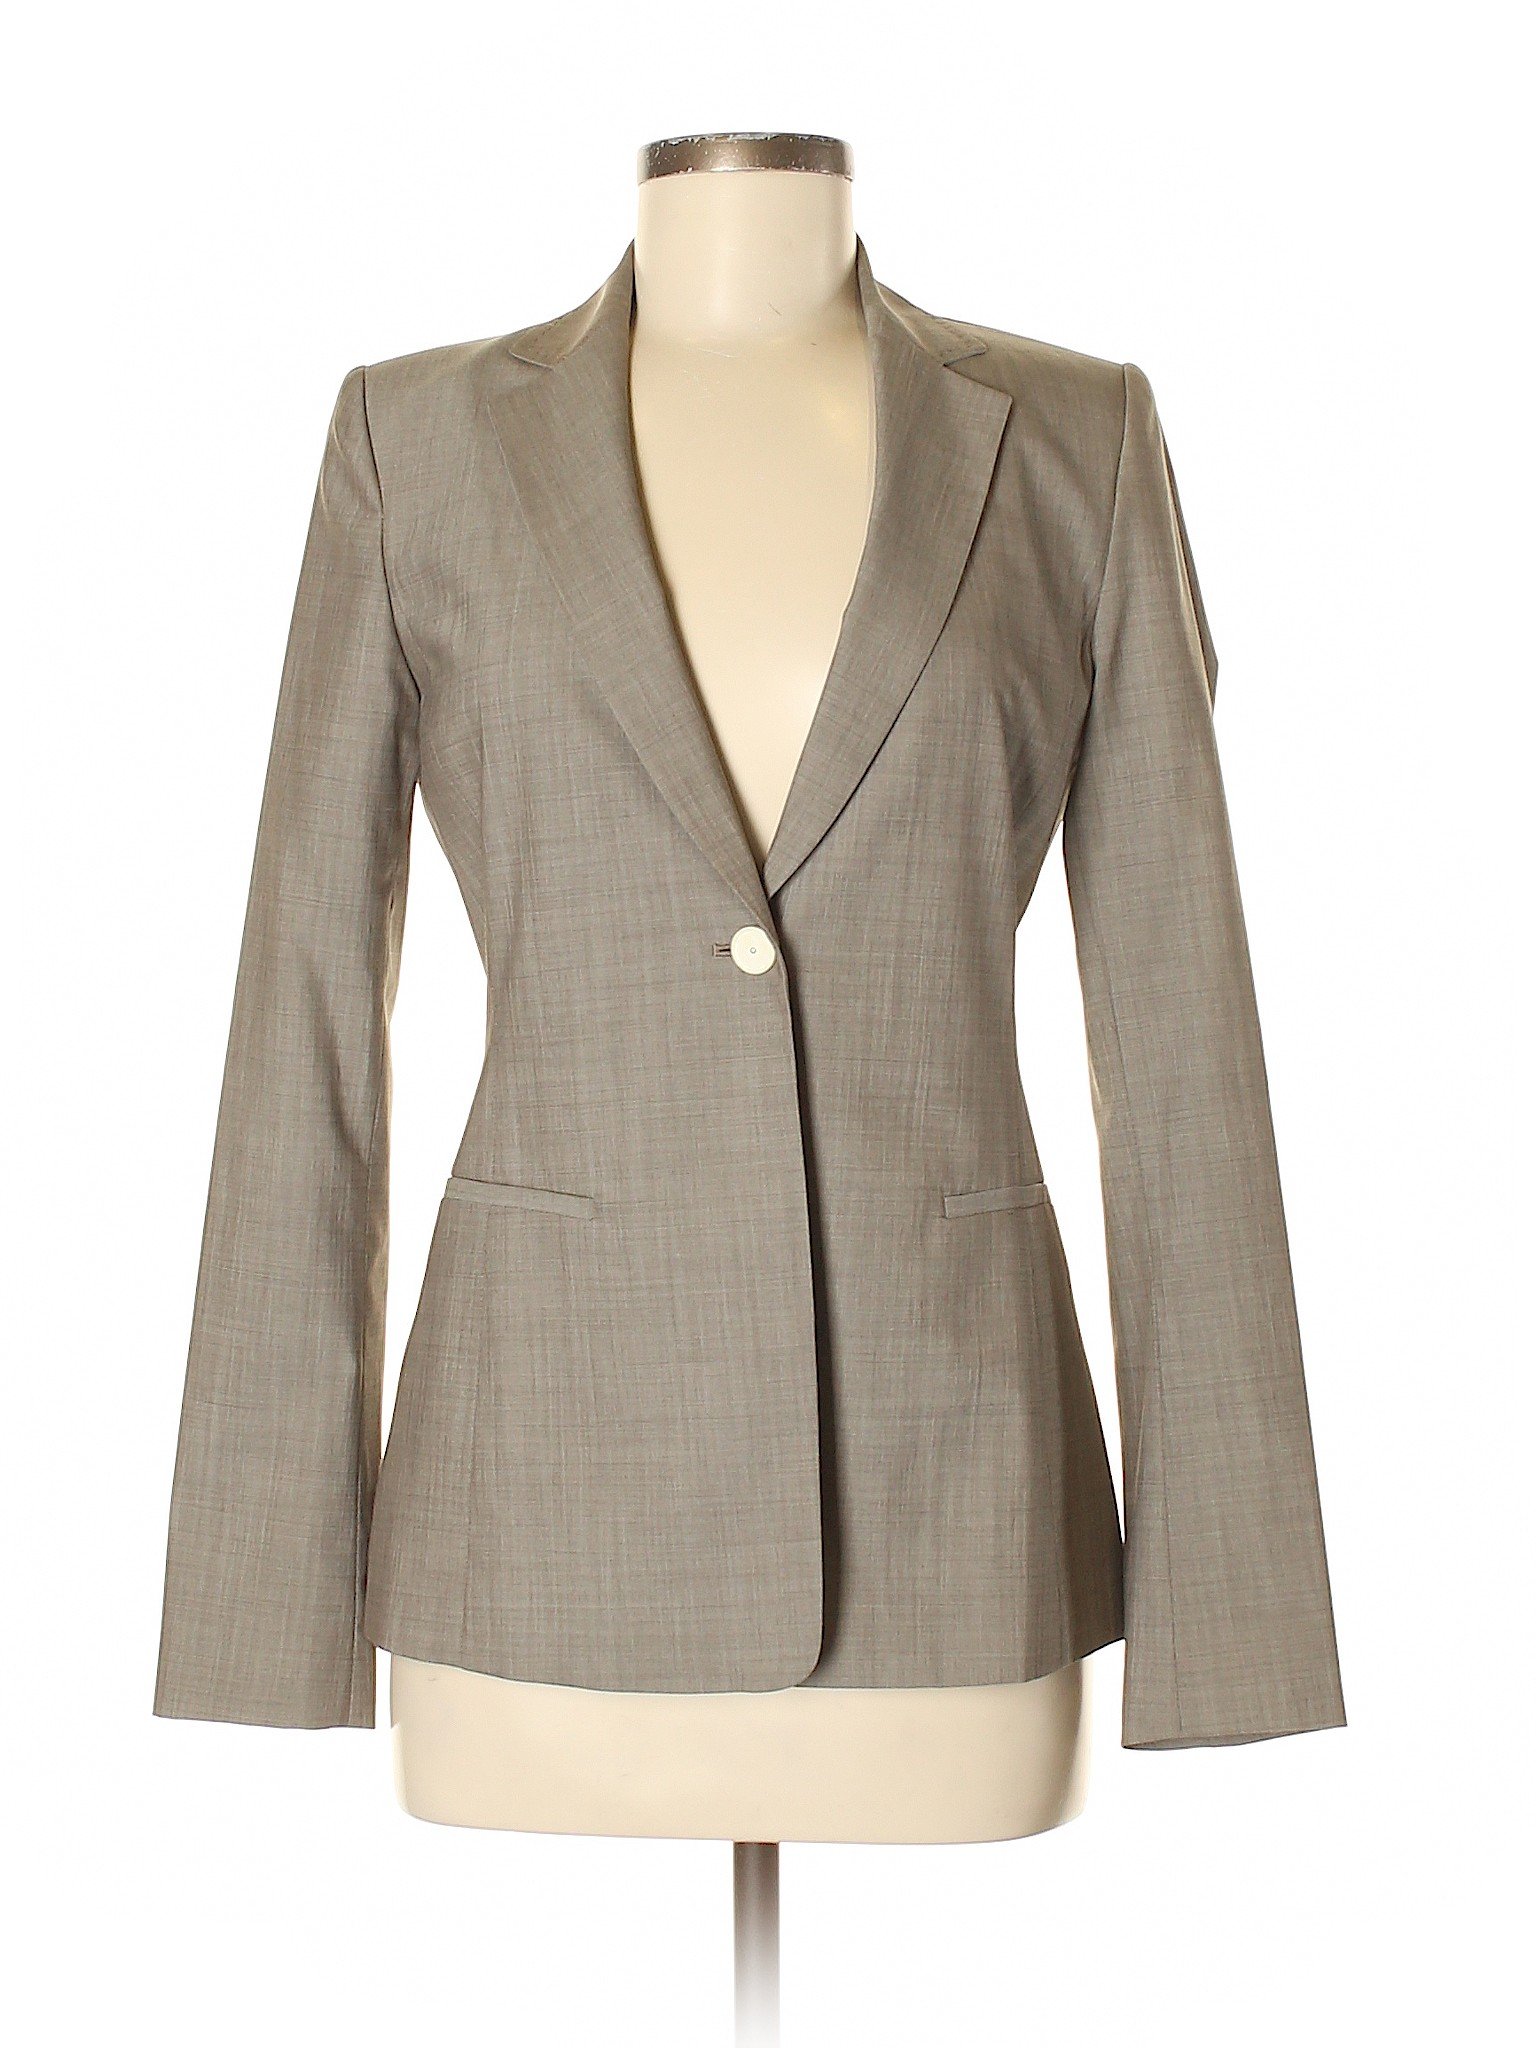 Elie Tahari Women Brown Wool Blazer 2 | eBay